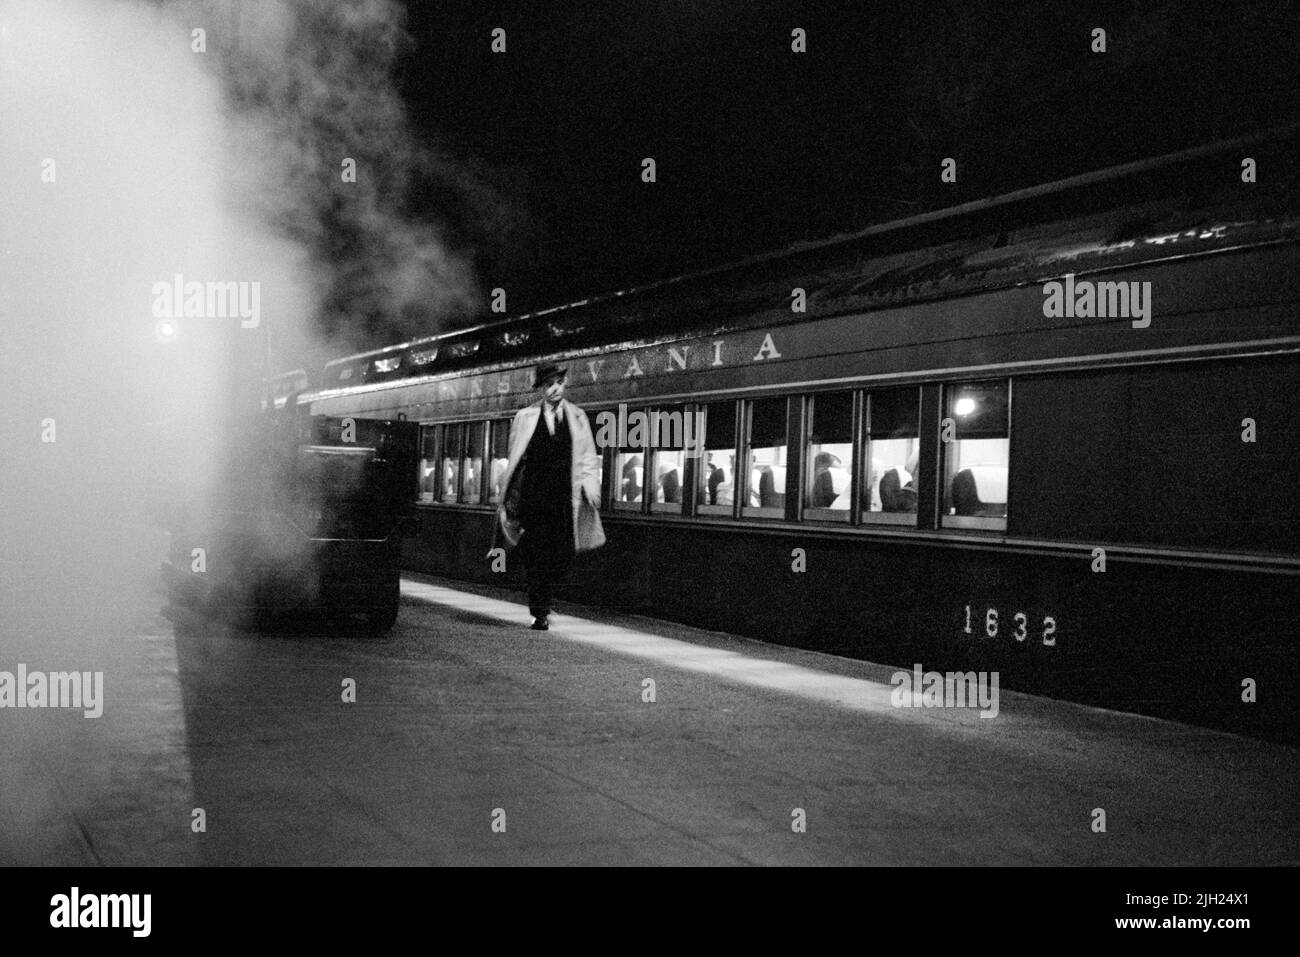 Man walking on platform next to train, Pennsylvania Station, New York City, New York, USA, Marion S. Trikosko, U.S. News & World Report Magazine Photograph Collection, April 1959 Stock Photo